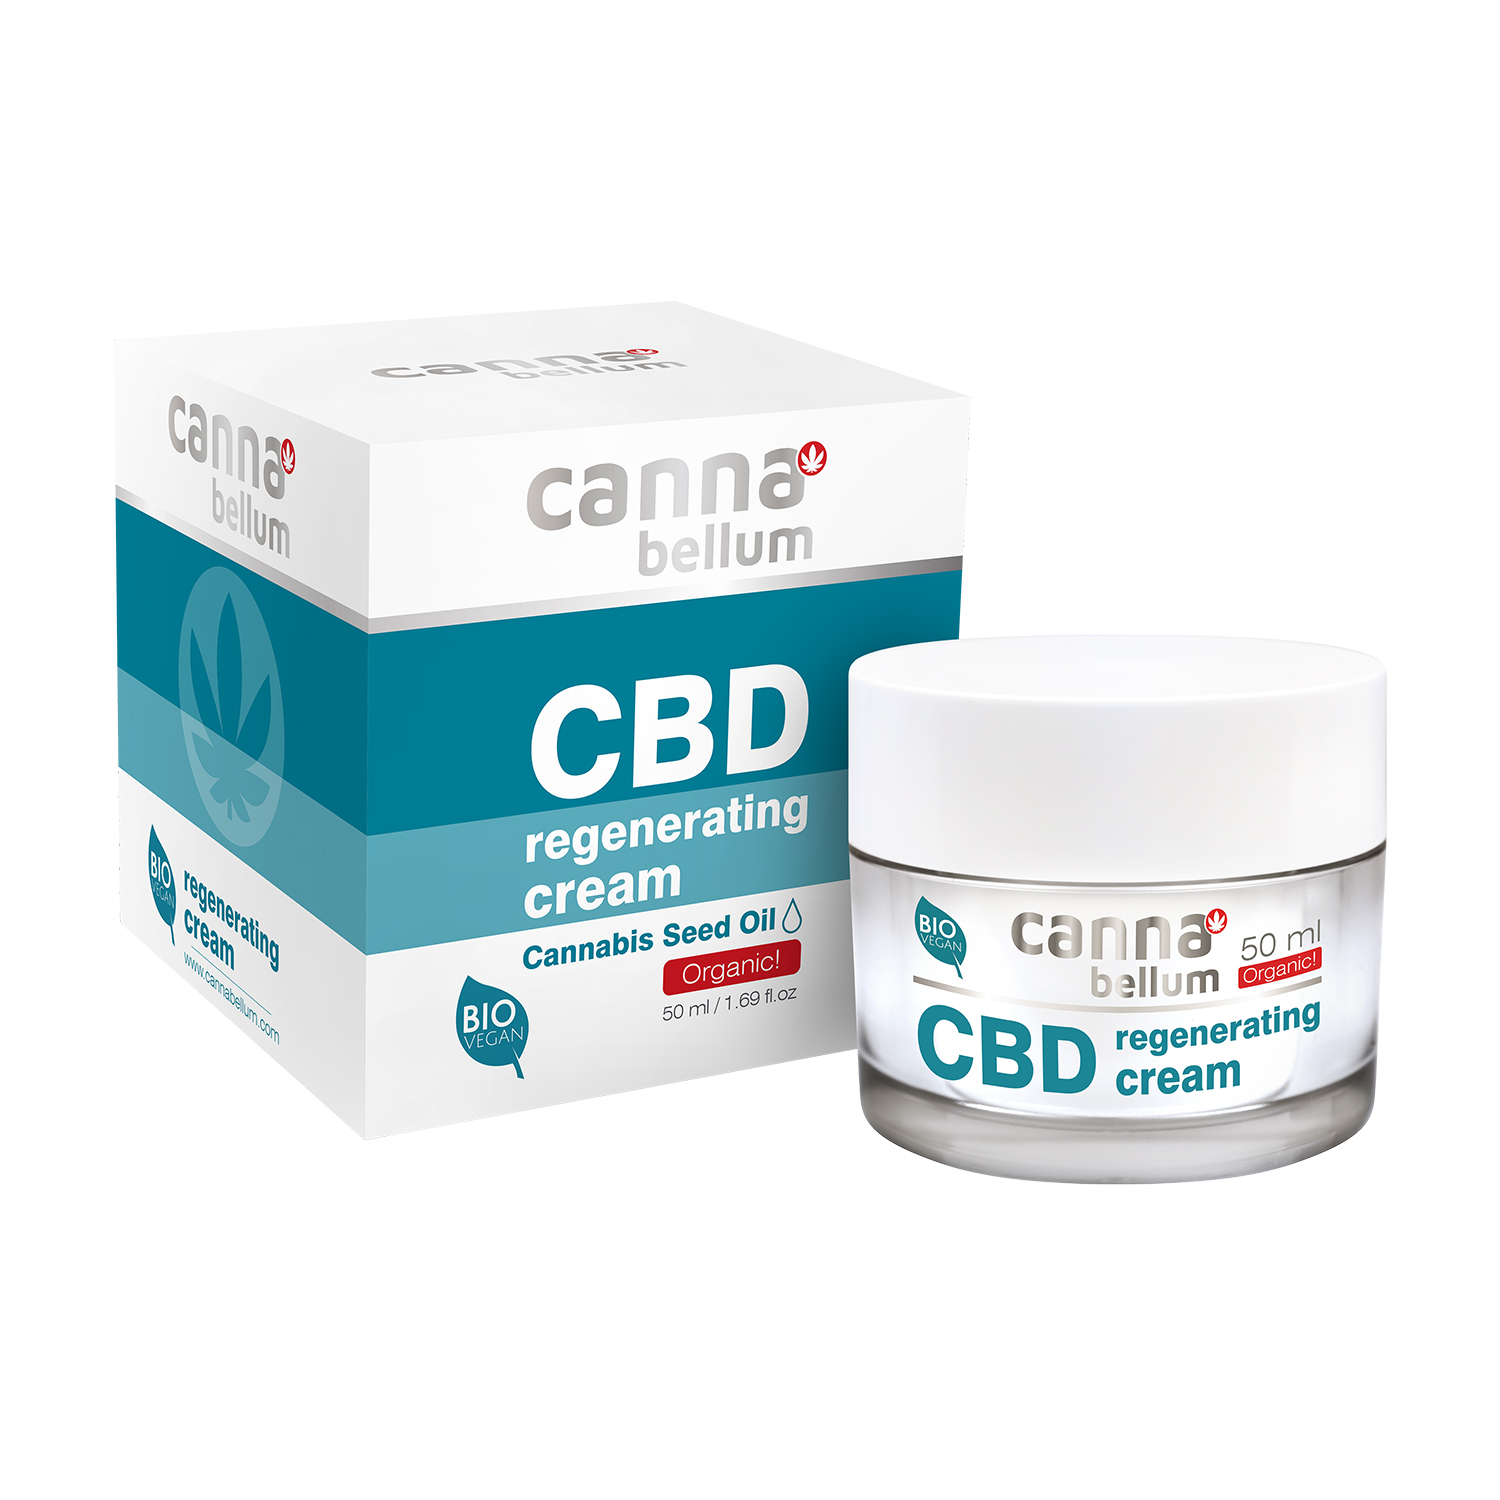 Cannabellum CBD regenerating cream 50ml P1253 komplet WEB 39